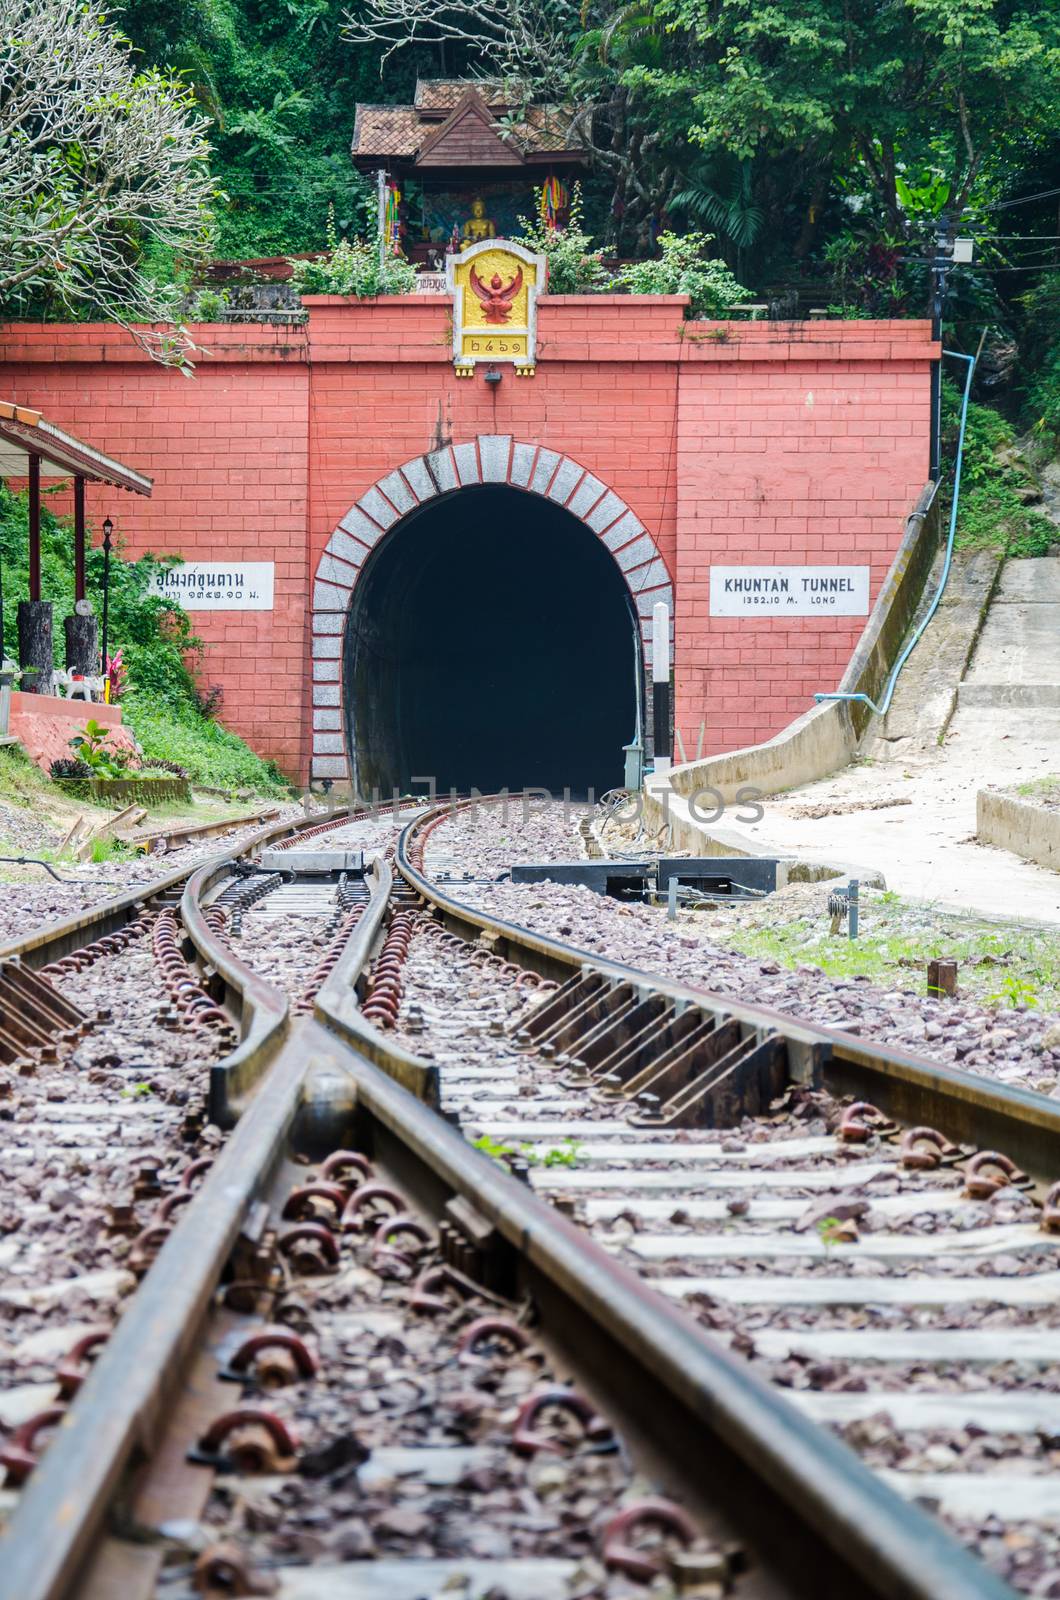 Khun Tan Tunnel, Longest train tunnel in Thailand.